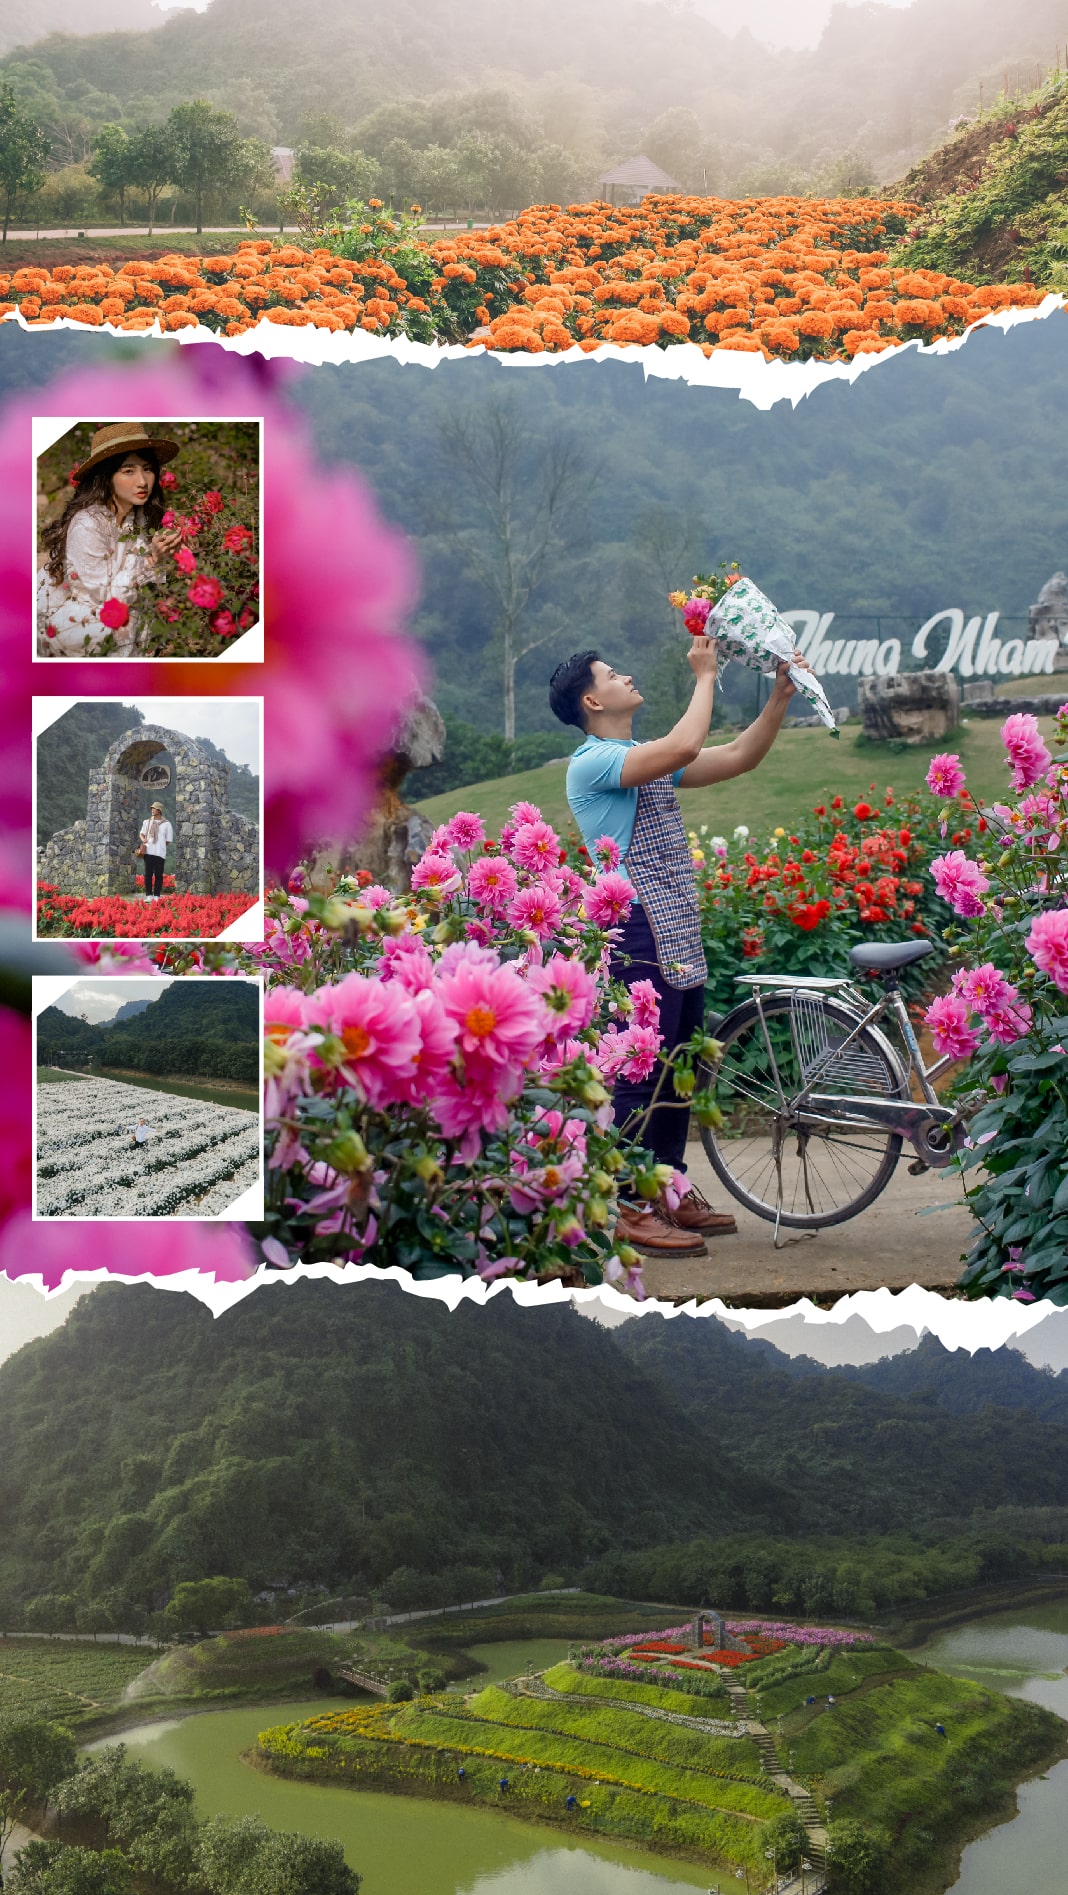 Thung Nham's flower paradise - Ninh Binh